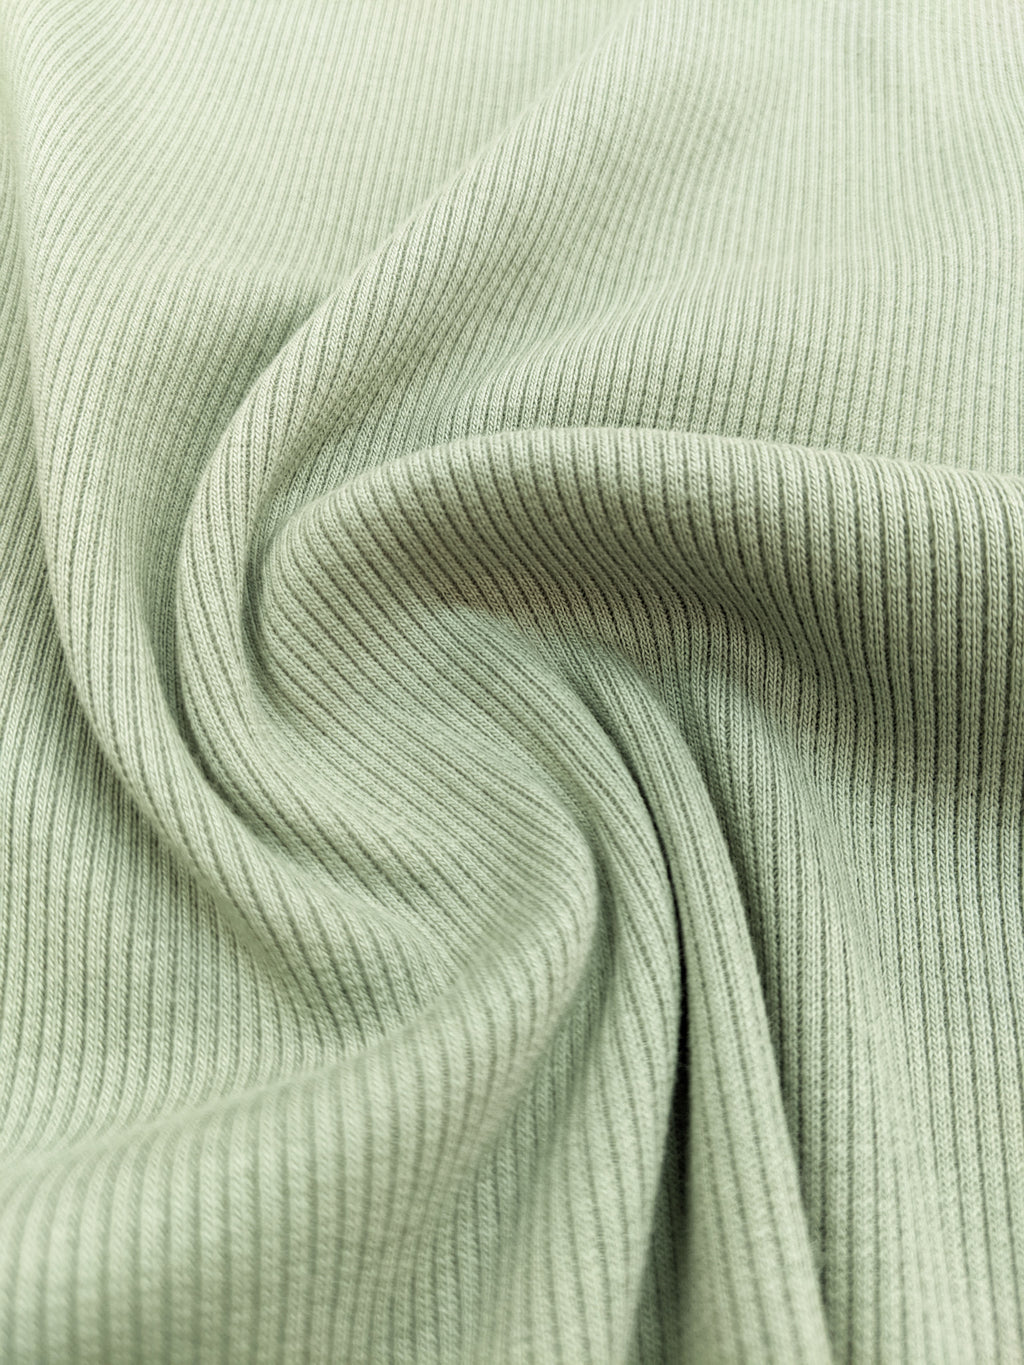 Bamboo Cotton Rib 2x2 - Heathered Almond - Natural Ribbed Knit